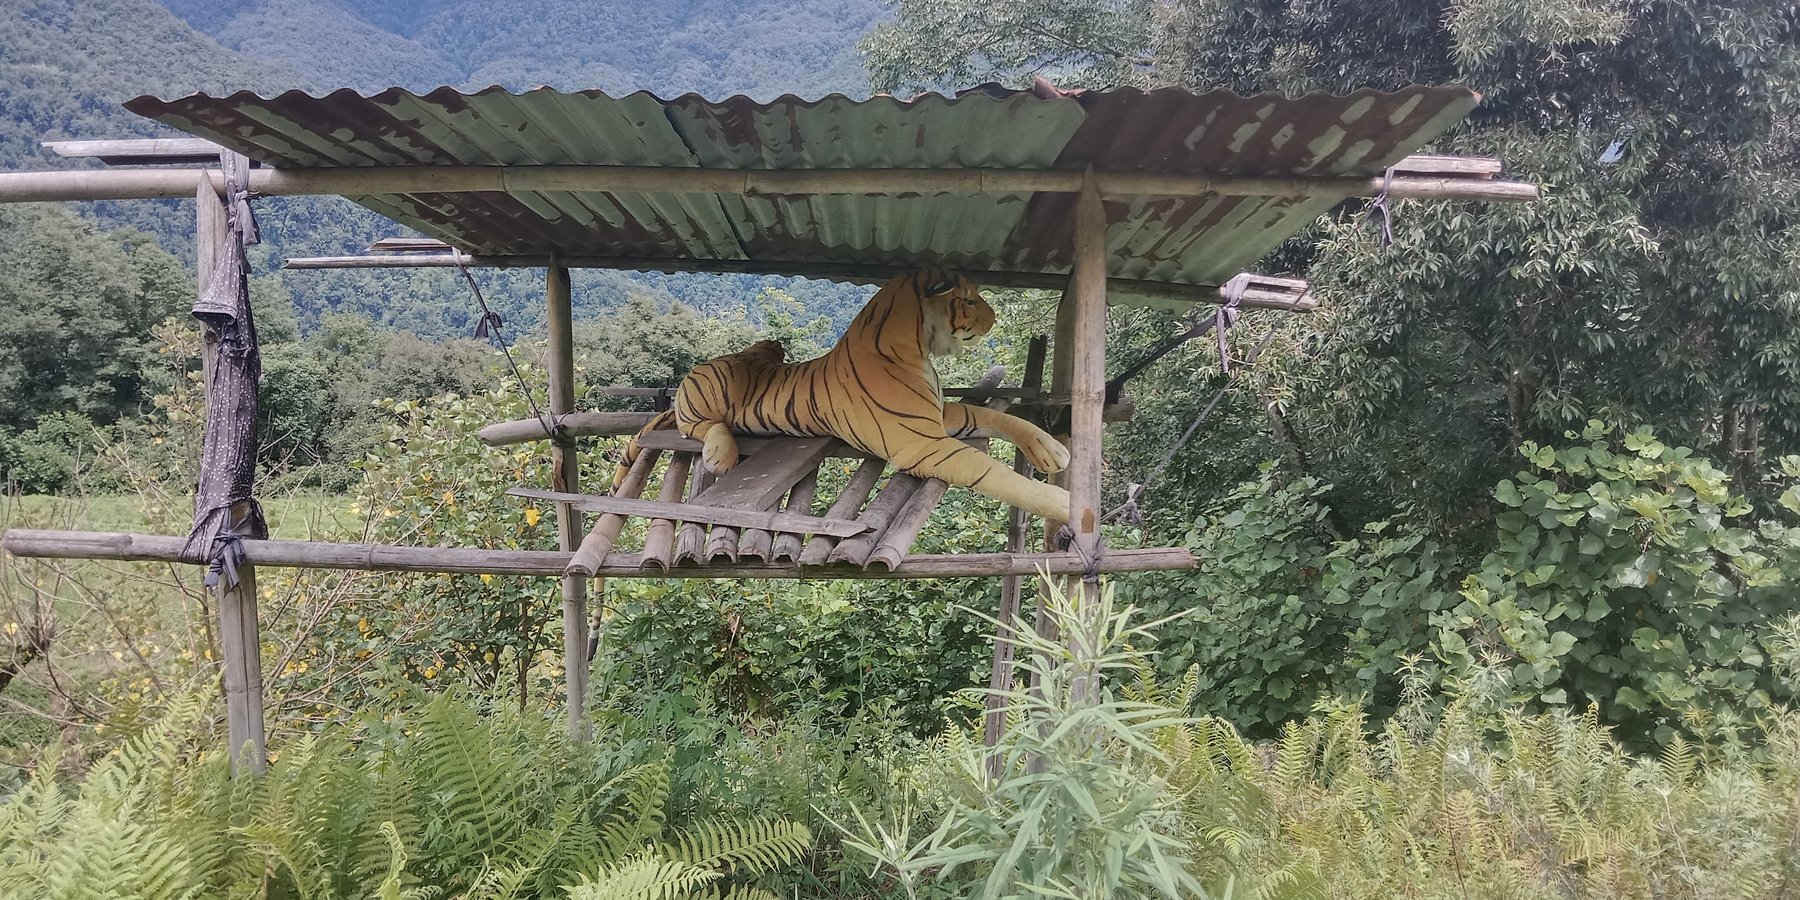 A dummy tiger guarding crops